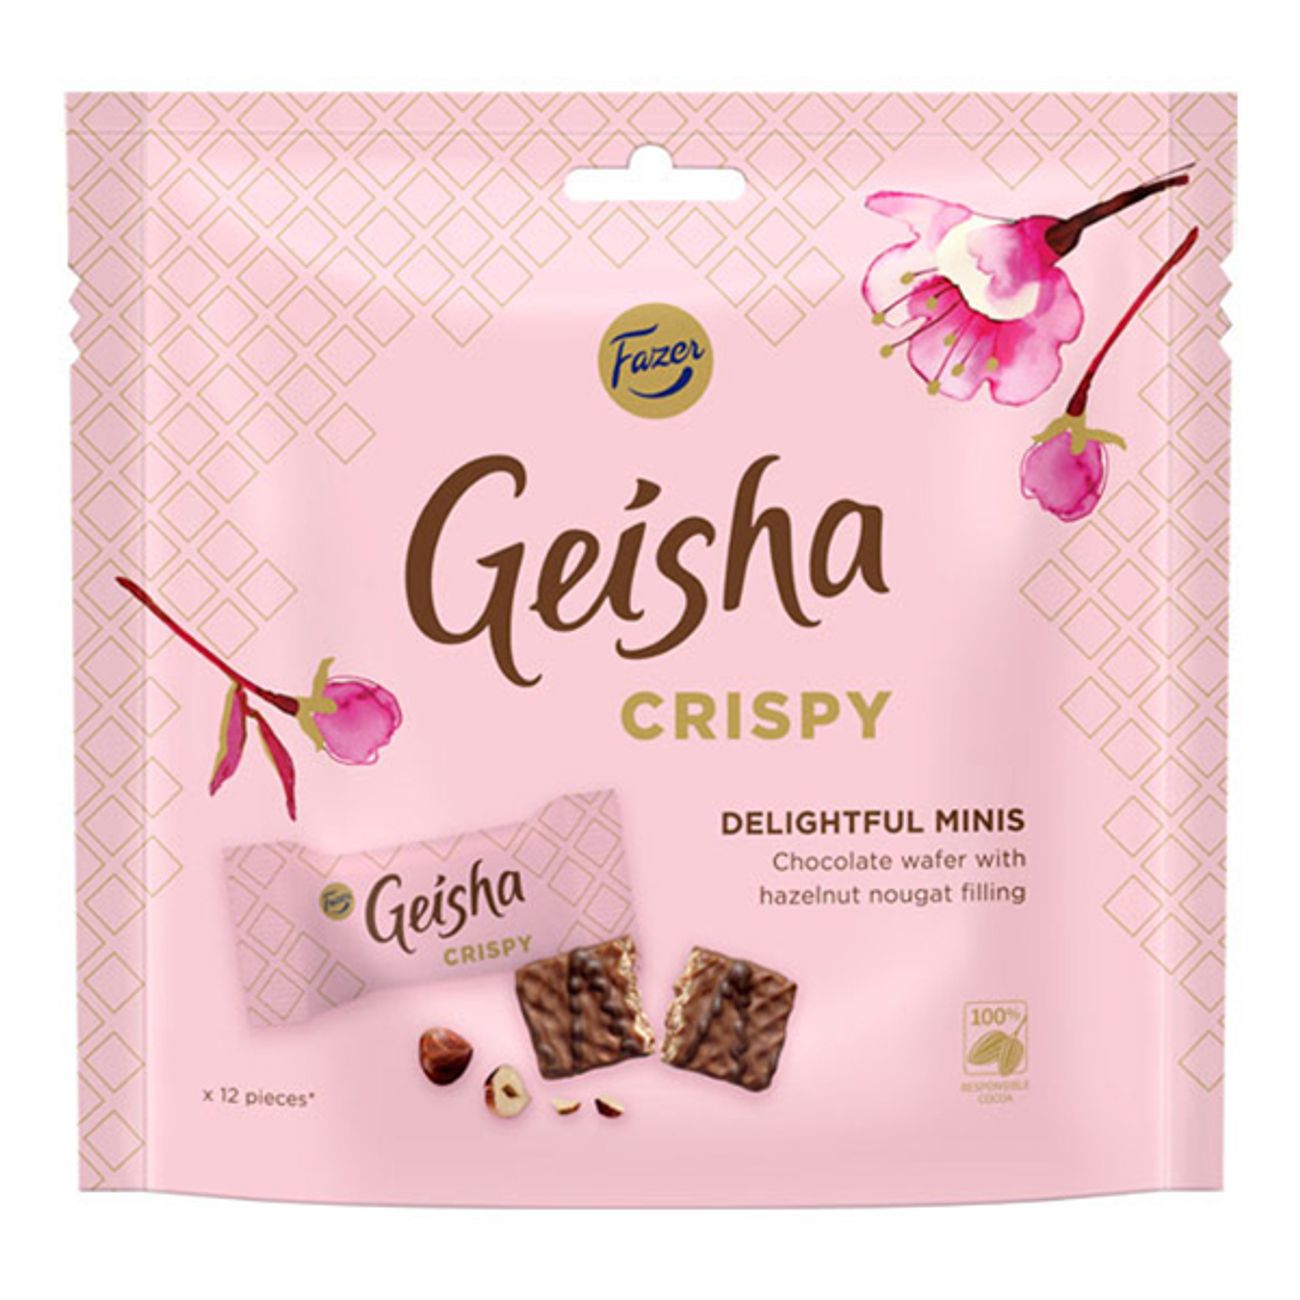 geisha-crispy-minis-1